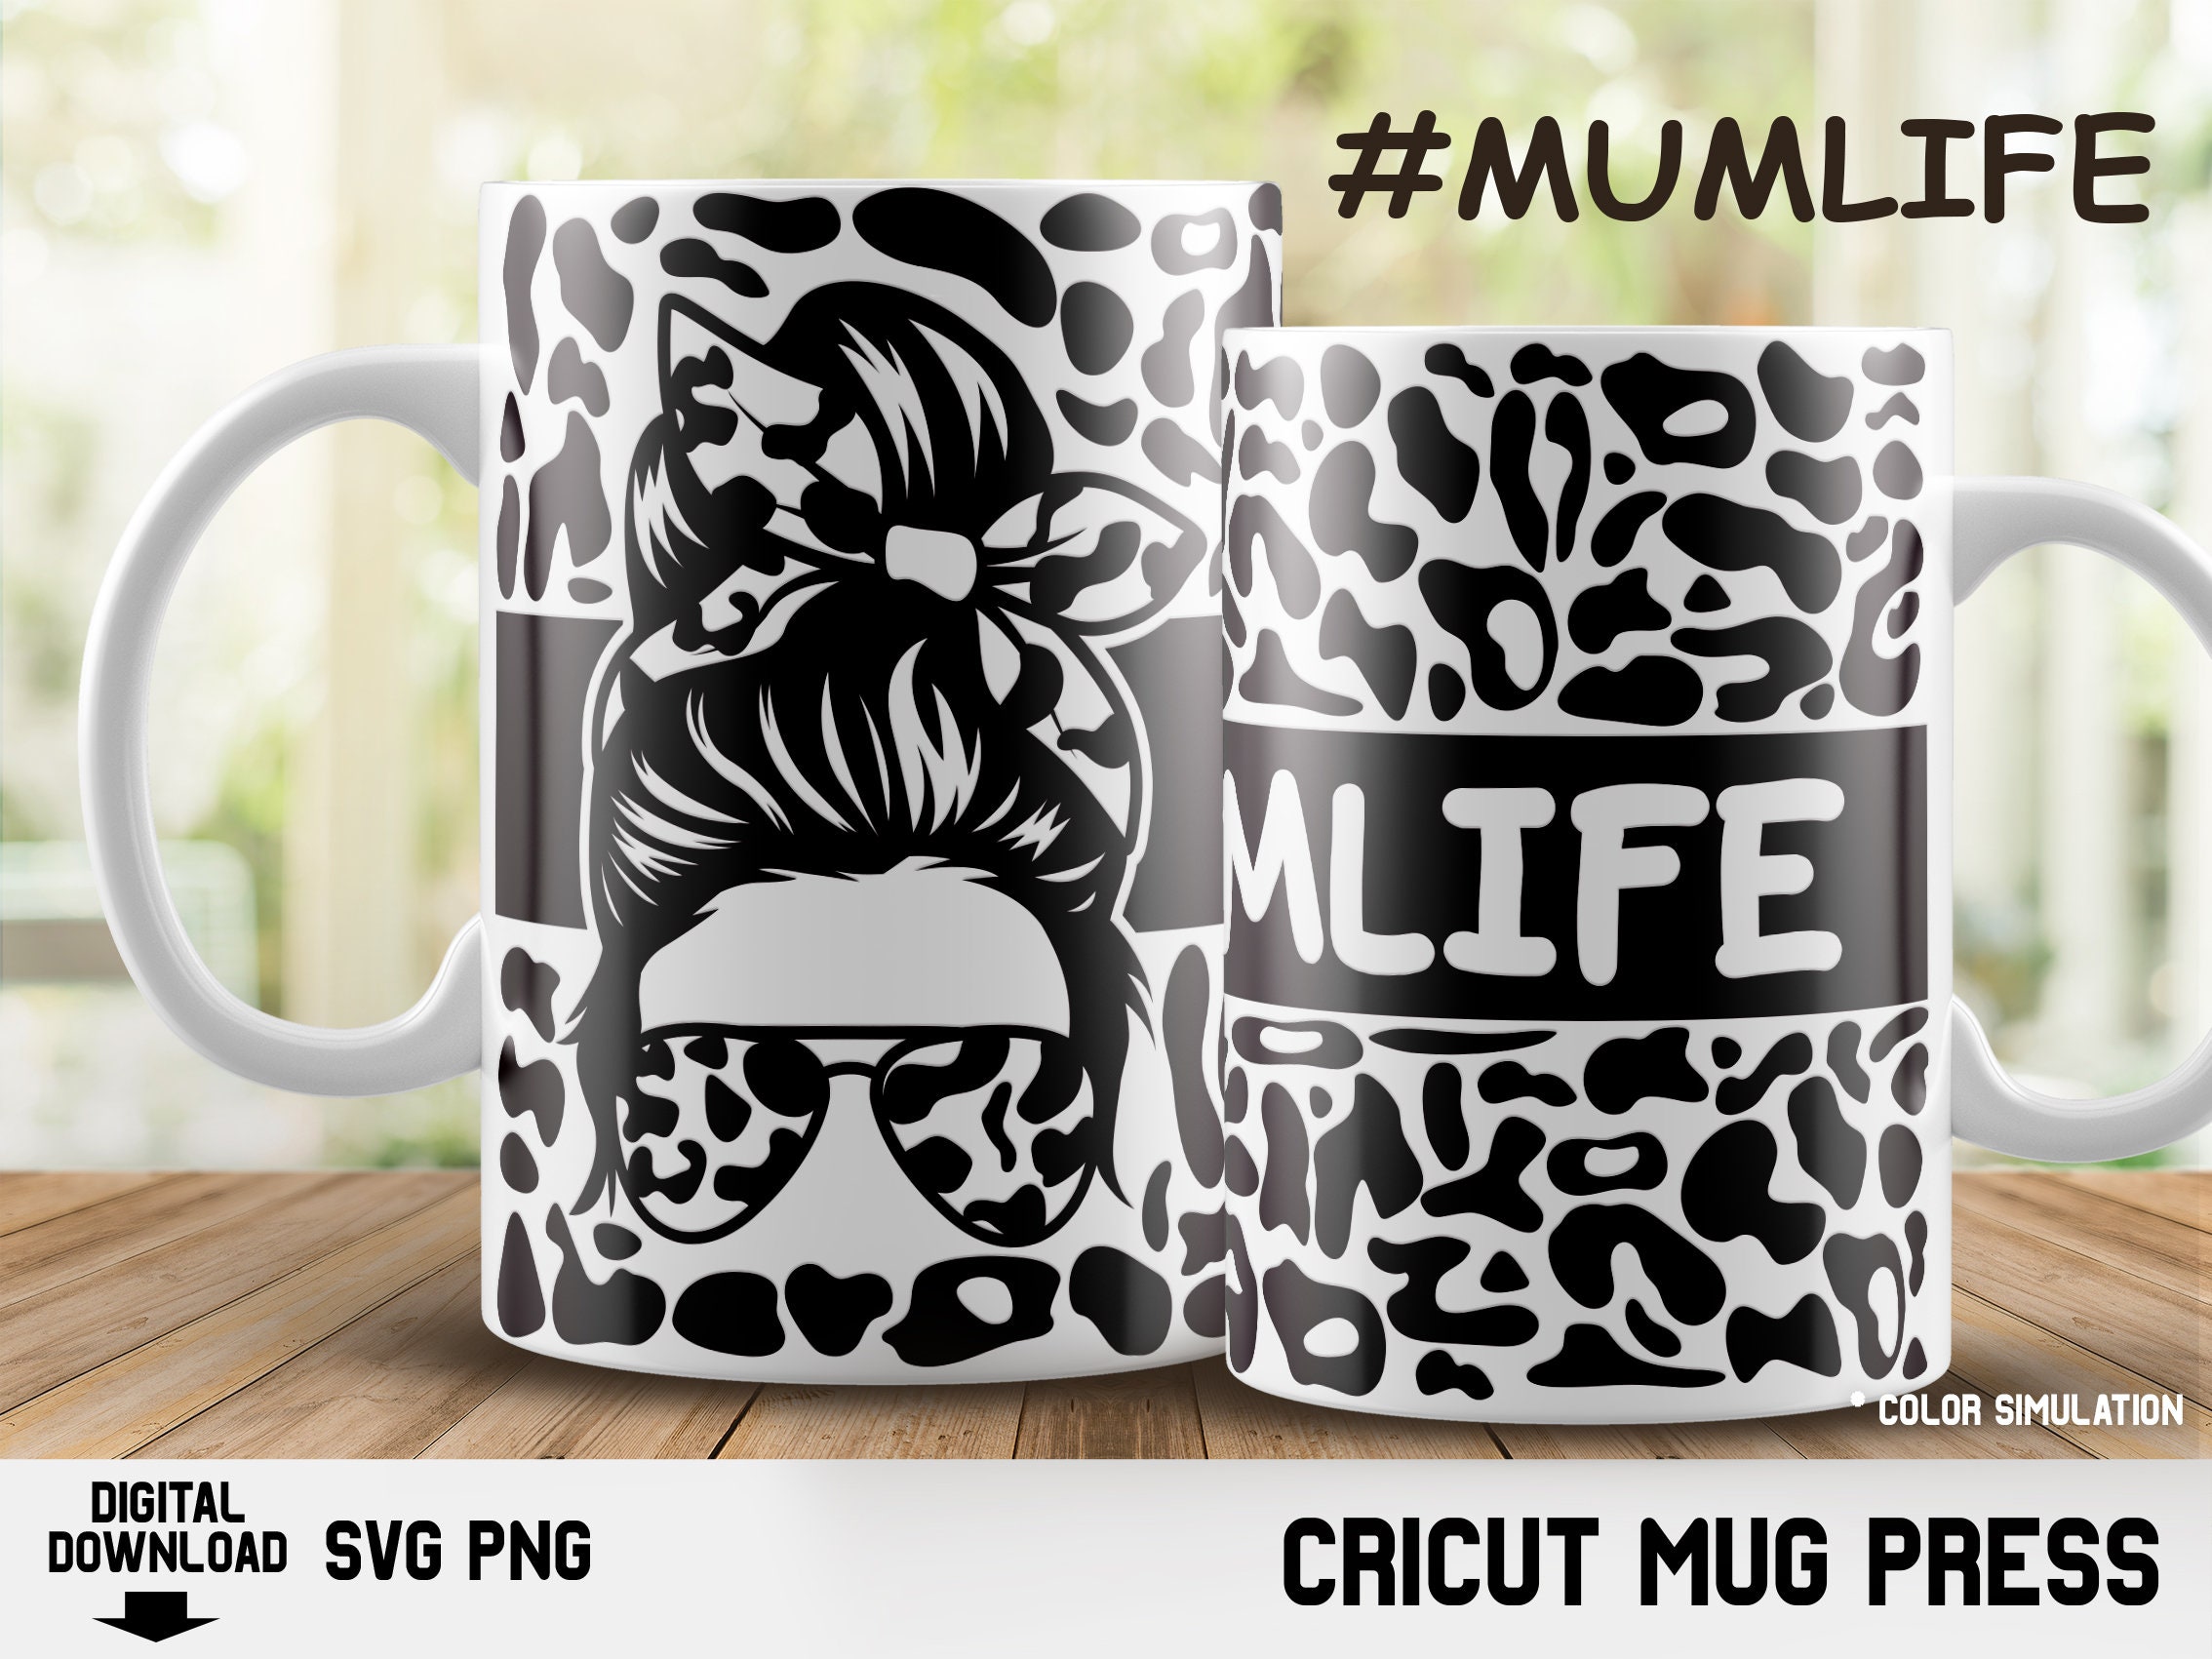 Easy DIY Mother's Day Mugs with the Cricut Mug Press